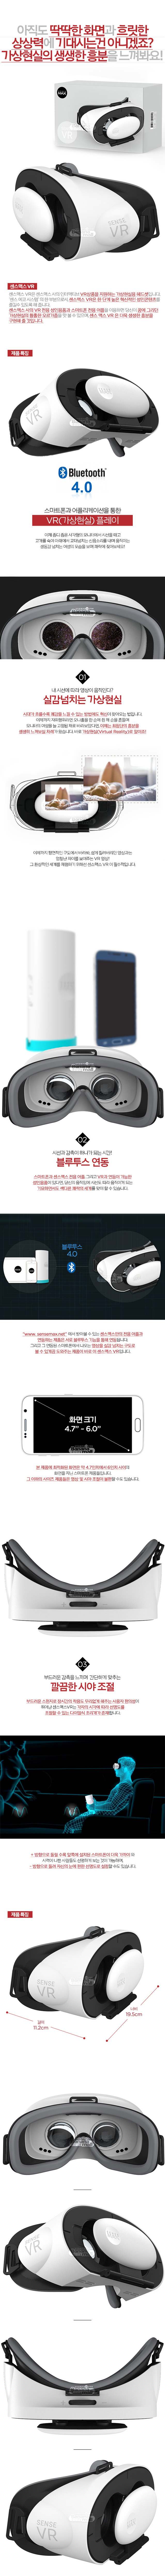  [VR기기] 센스맥스 VR(Sense Max VR) - 센스맥스